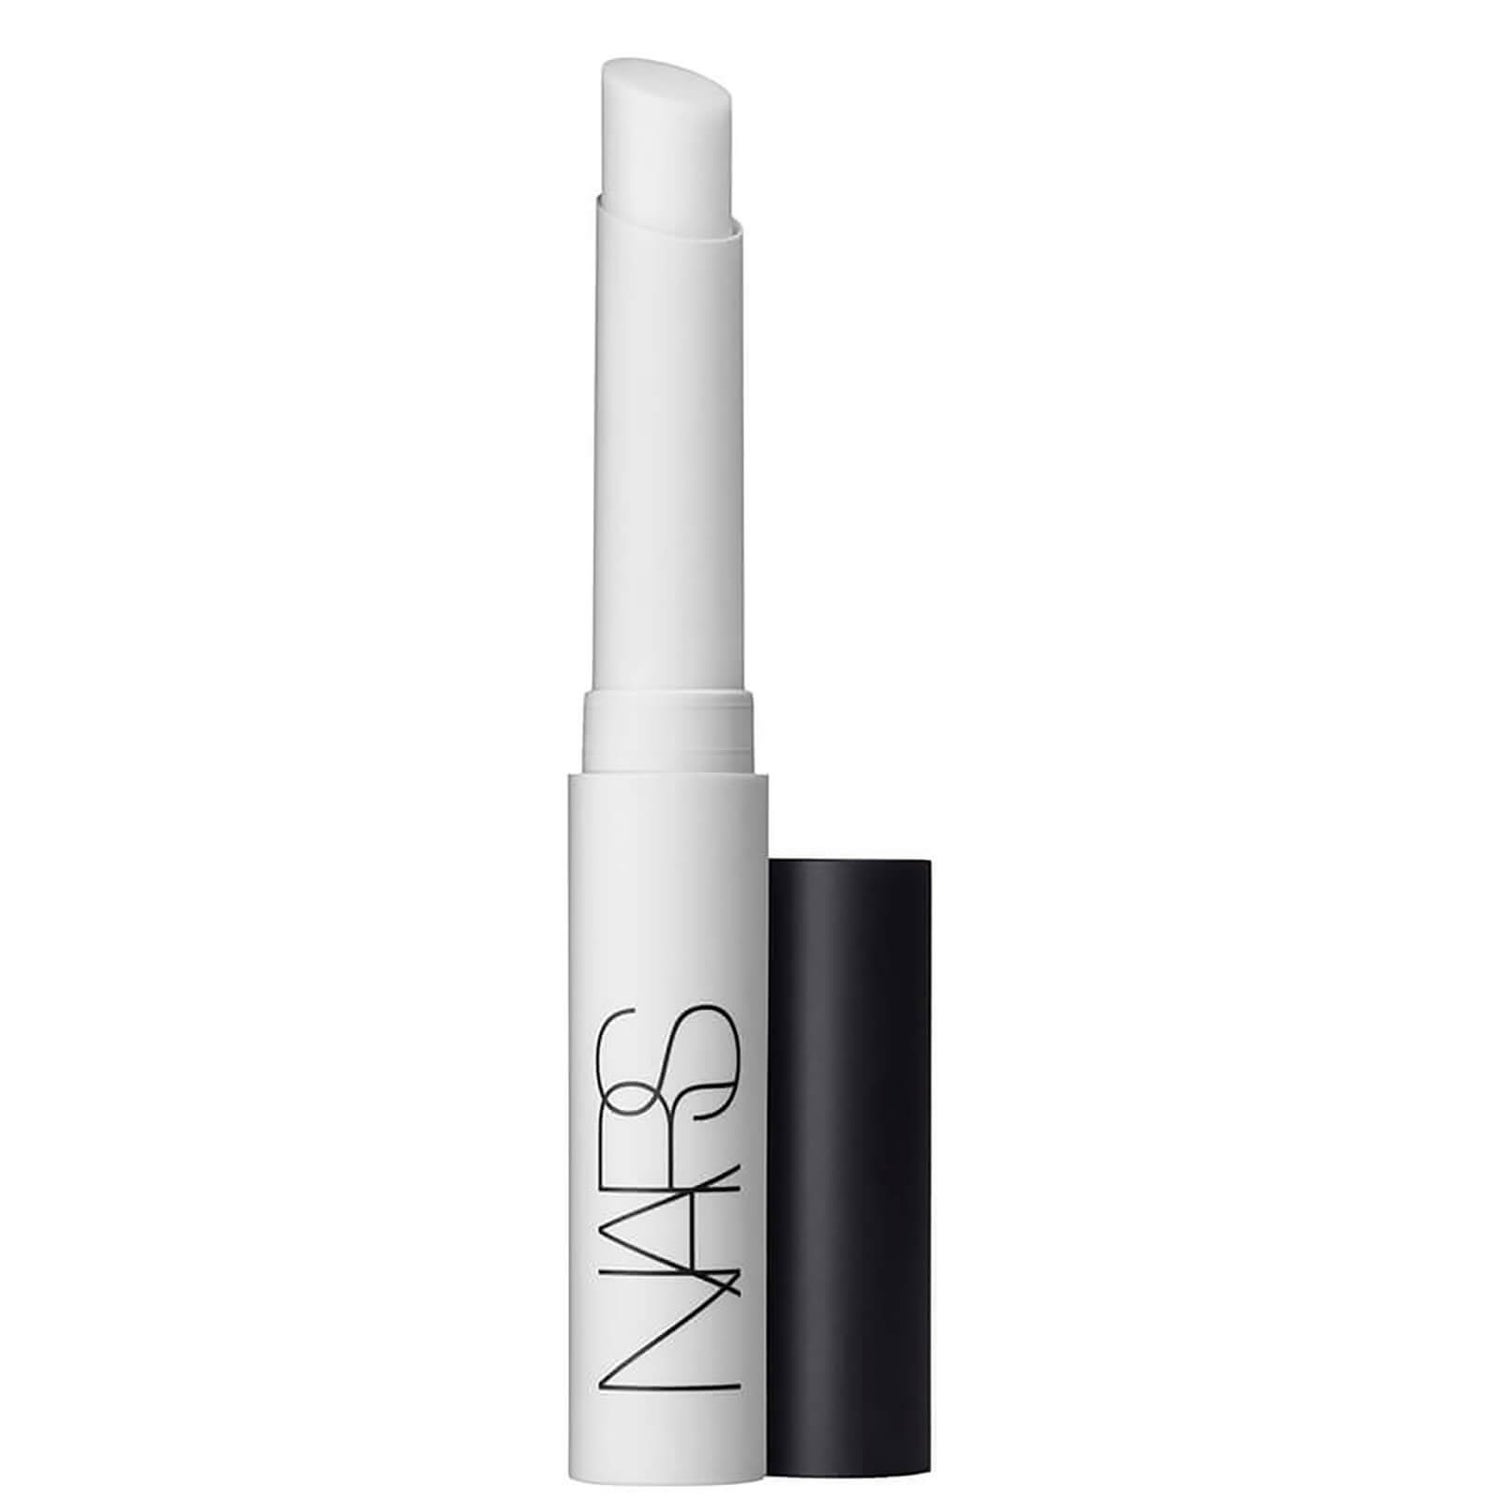 "Instant Line and Pore Perfector" de NARS Cosmetics